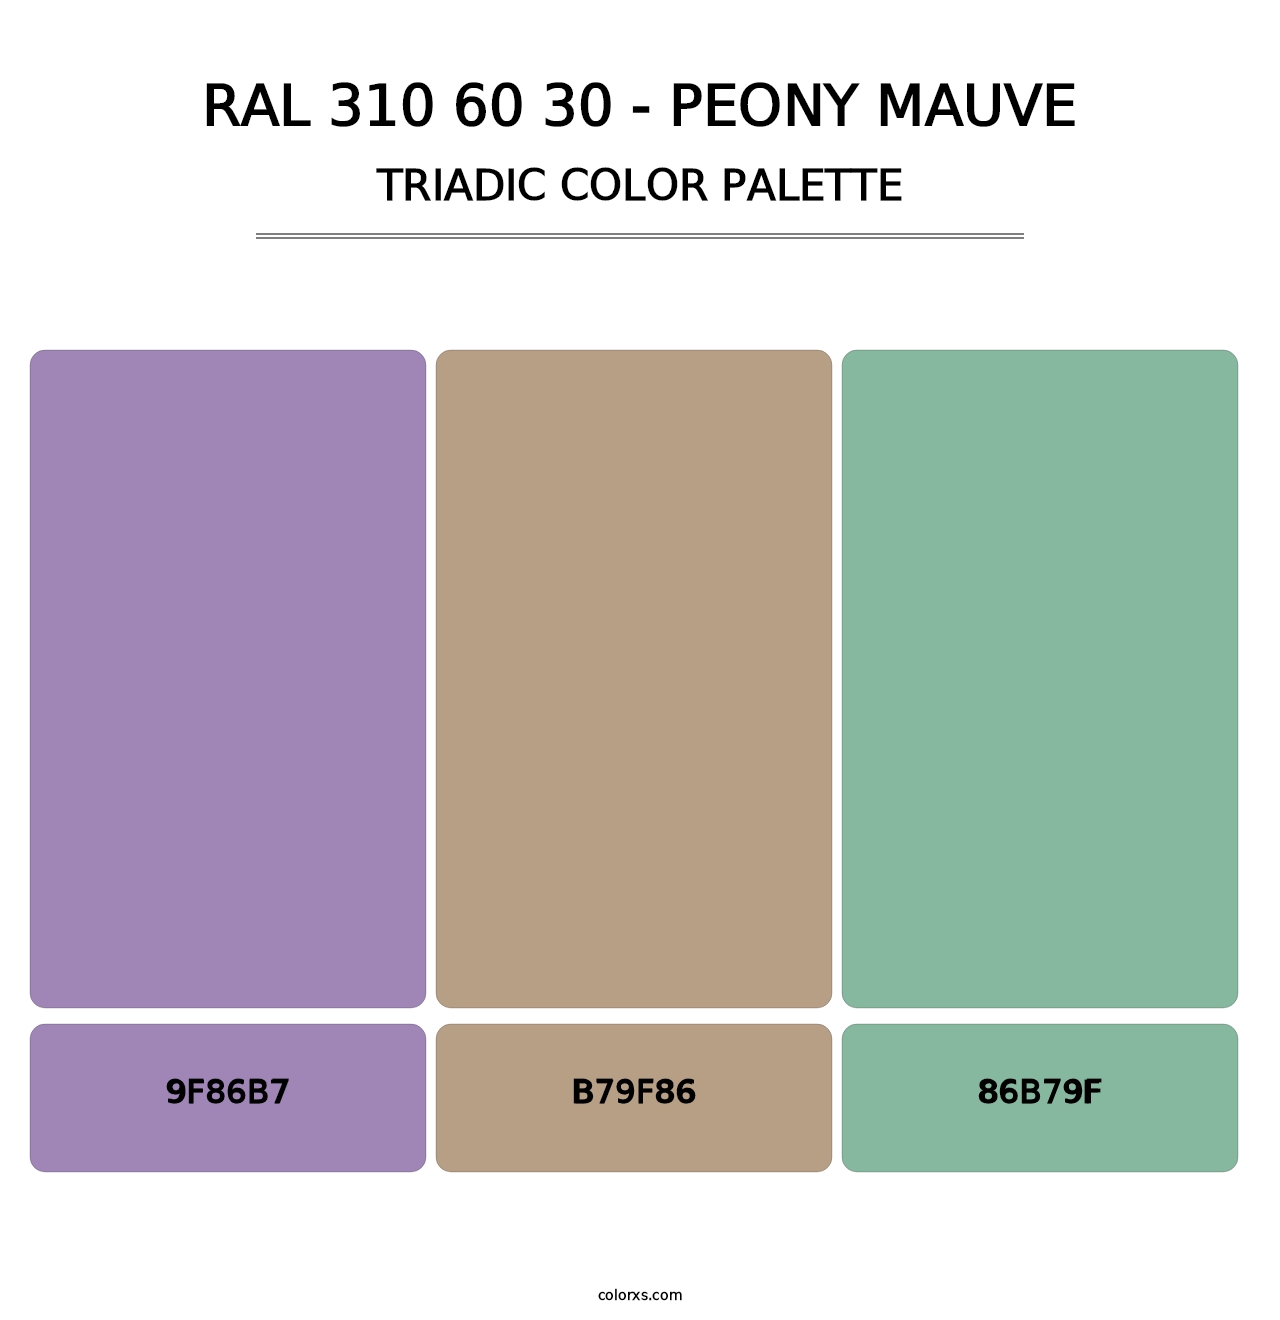 RAL 310 60 30 - Peony Mauve - Triadic Color Palette